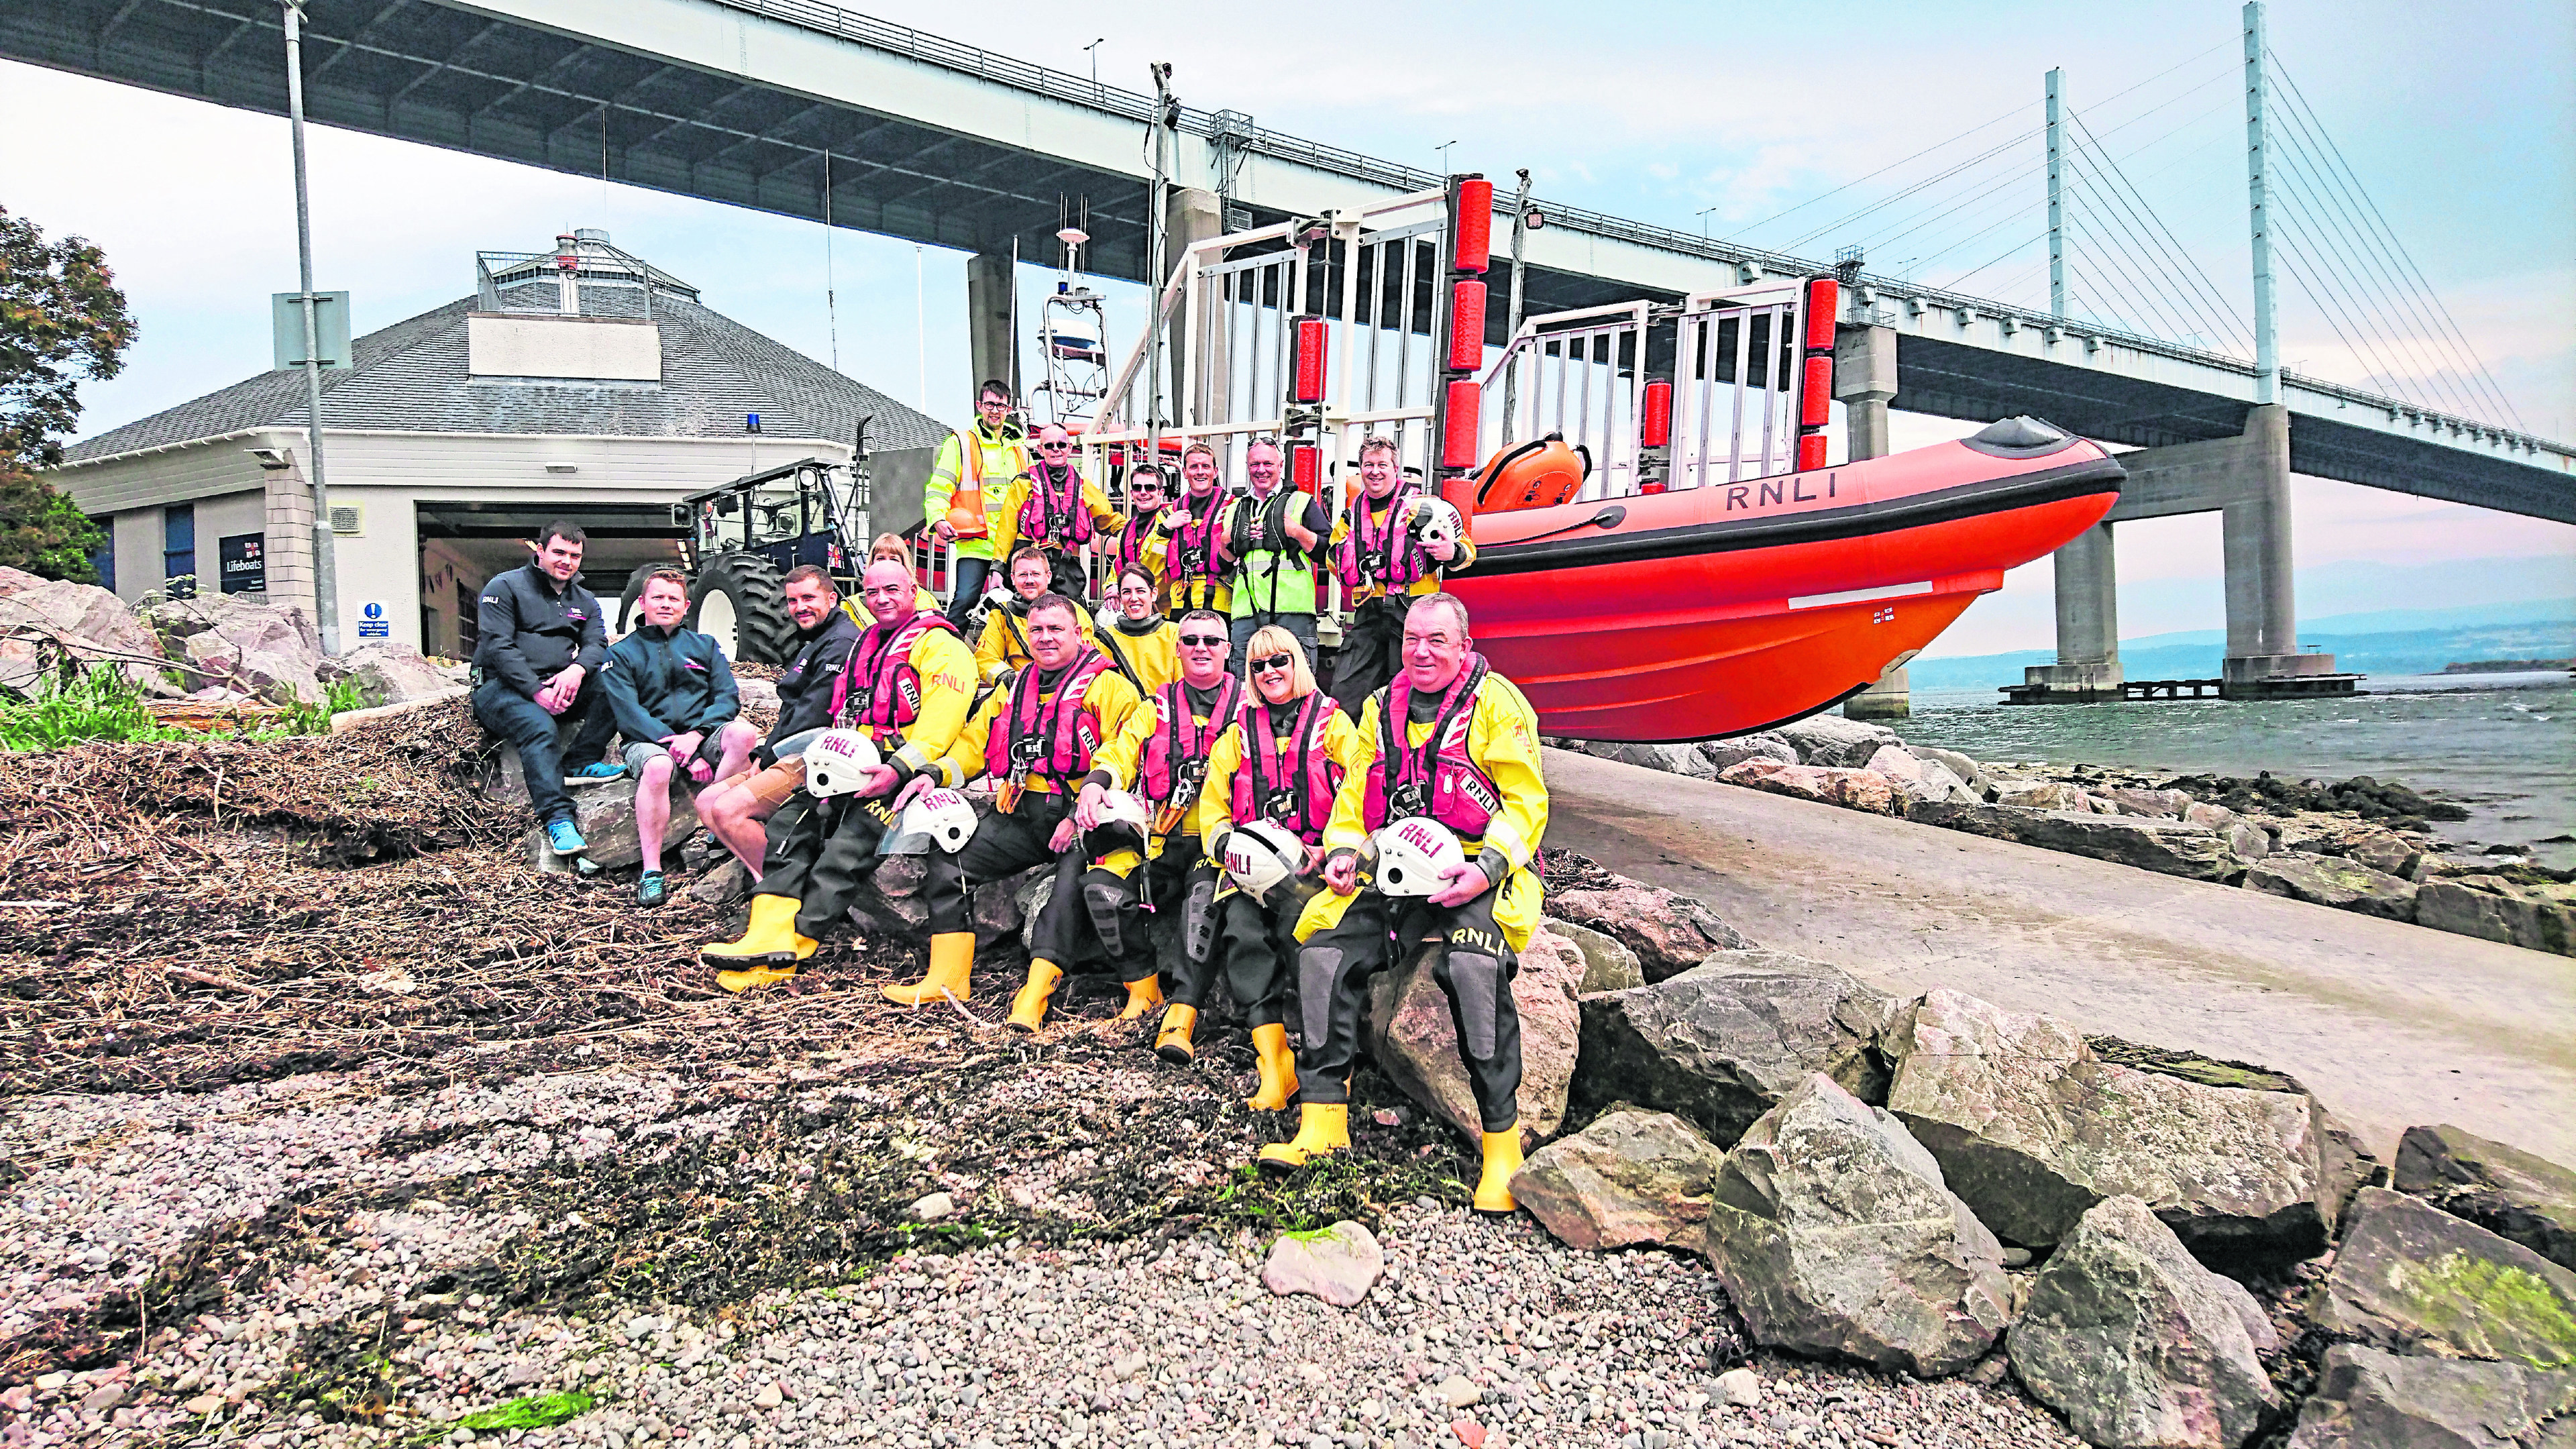 RNLI Kessock volunteer lifeboat crew.